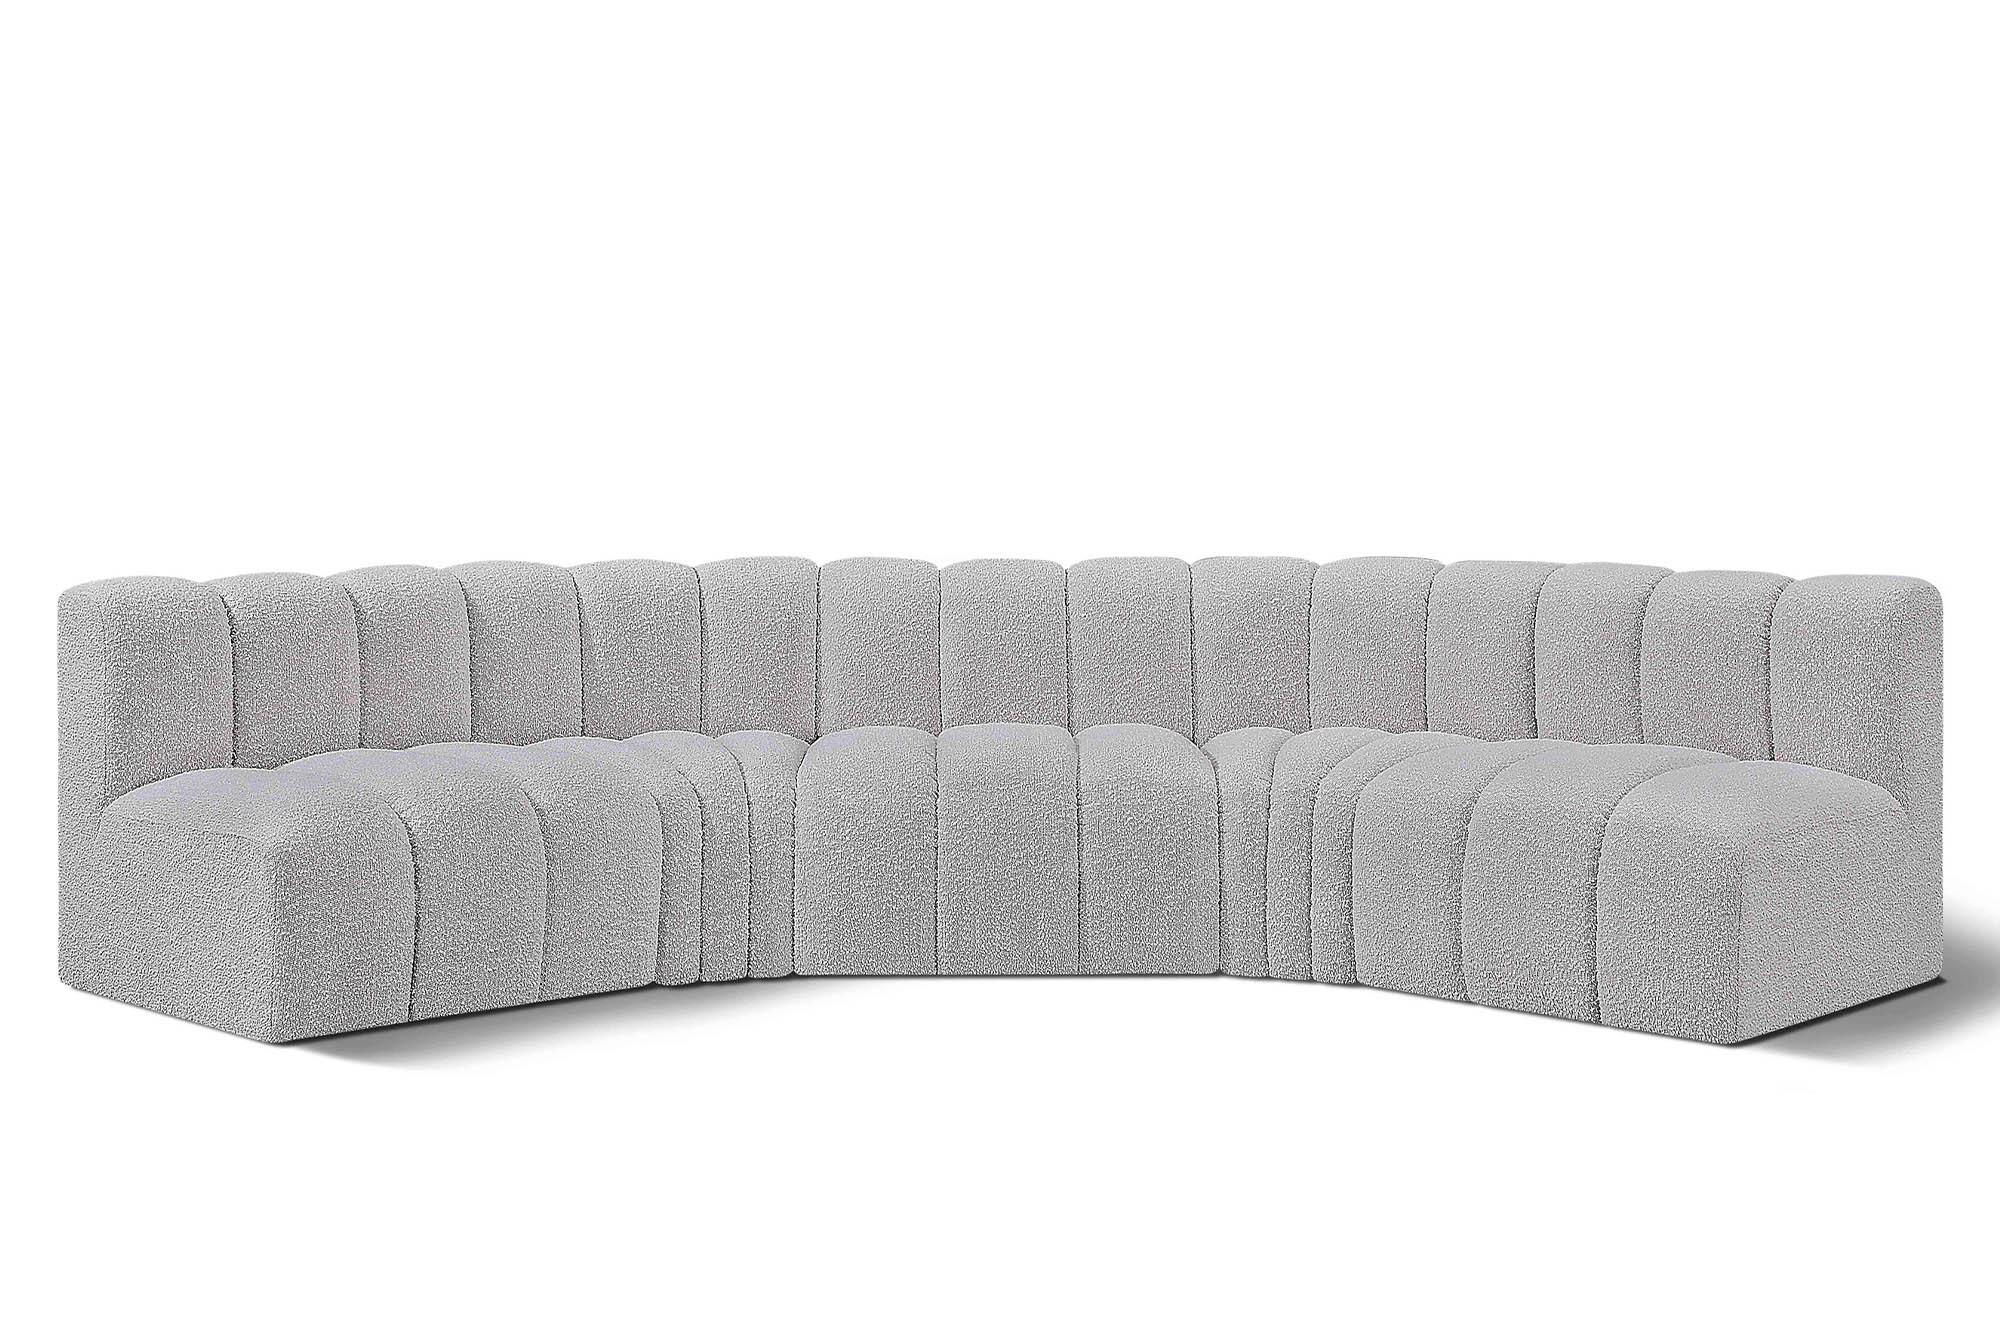 Contemporary, Modern Modular Sectional Sofa ARC 102Grey-S5A 102Grey-S5A in Gray 